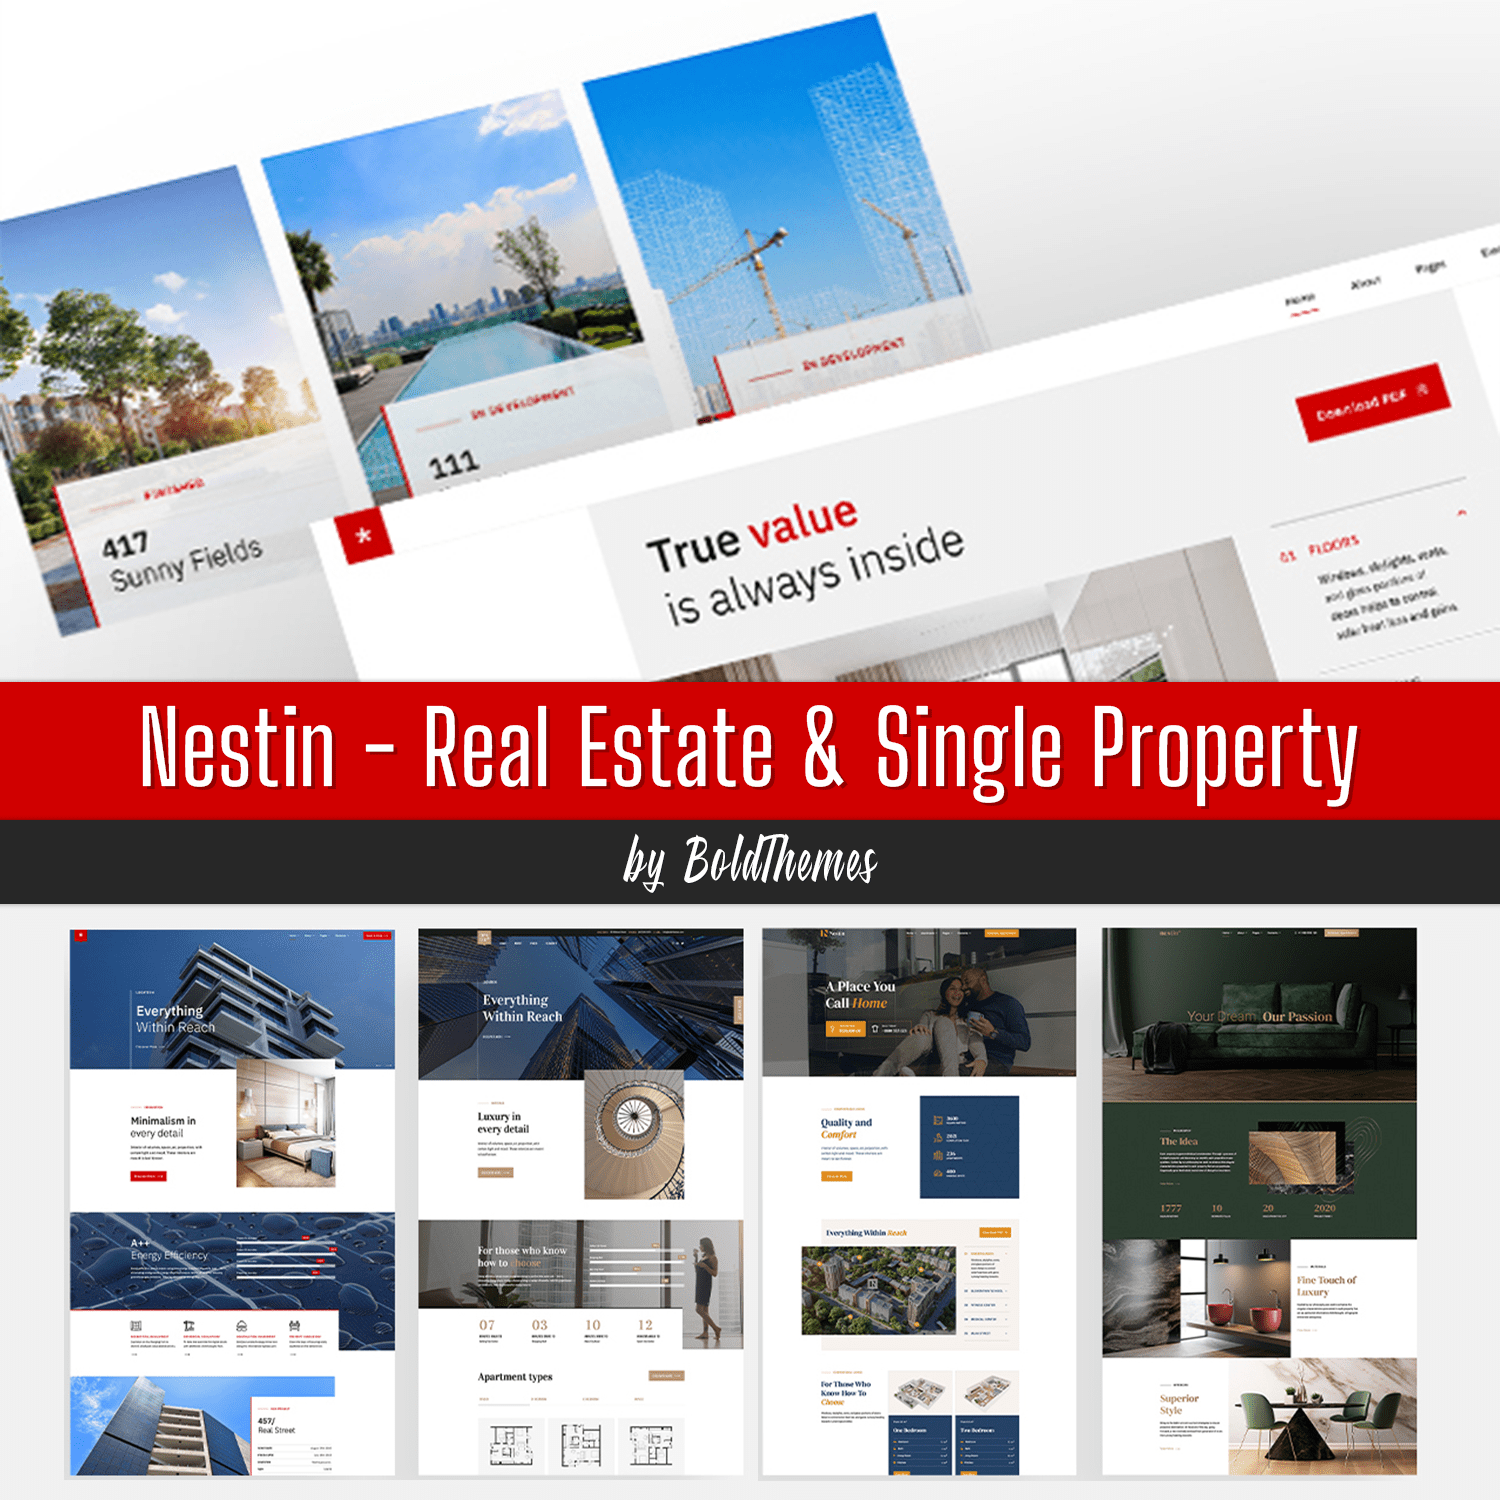 Nestin - Real Estate & Single Property cover.